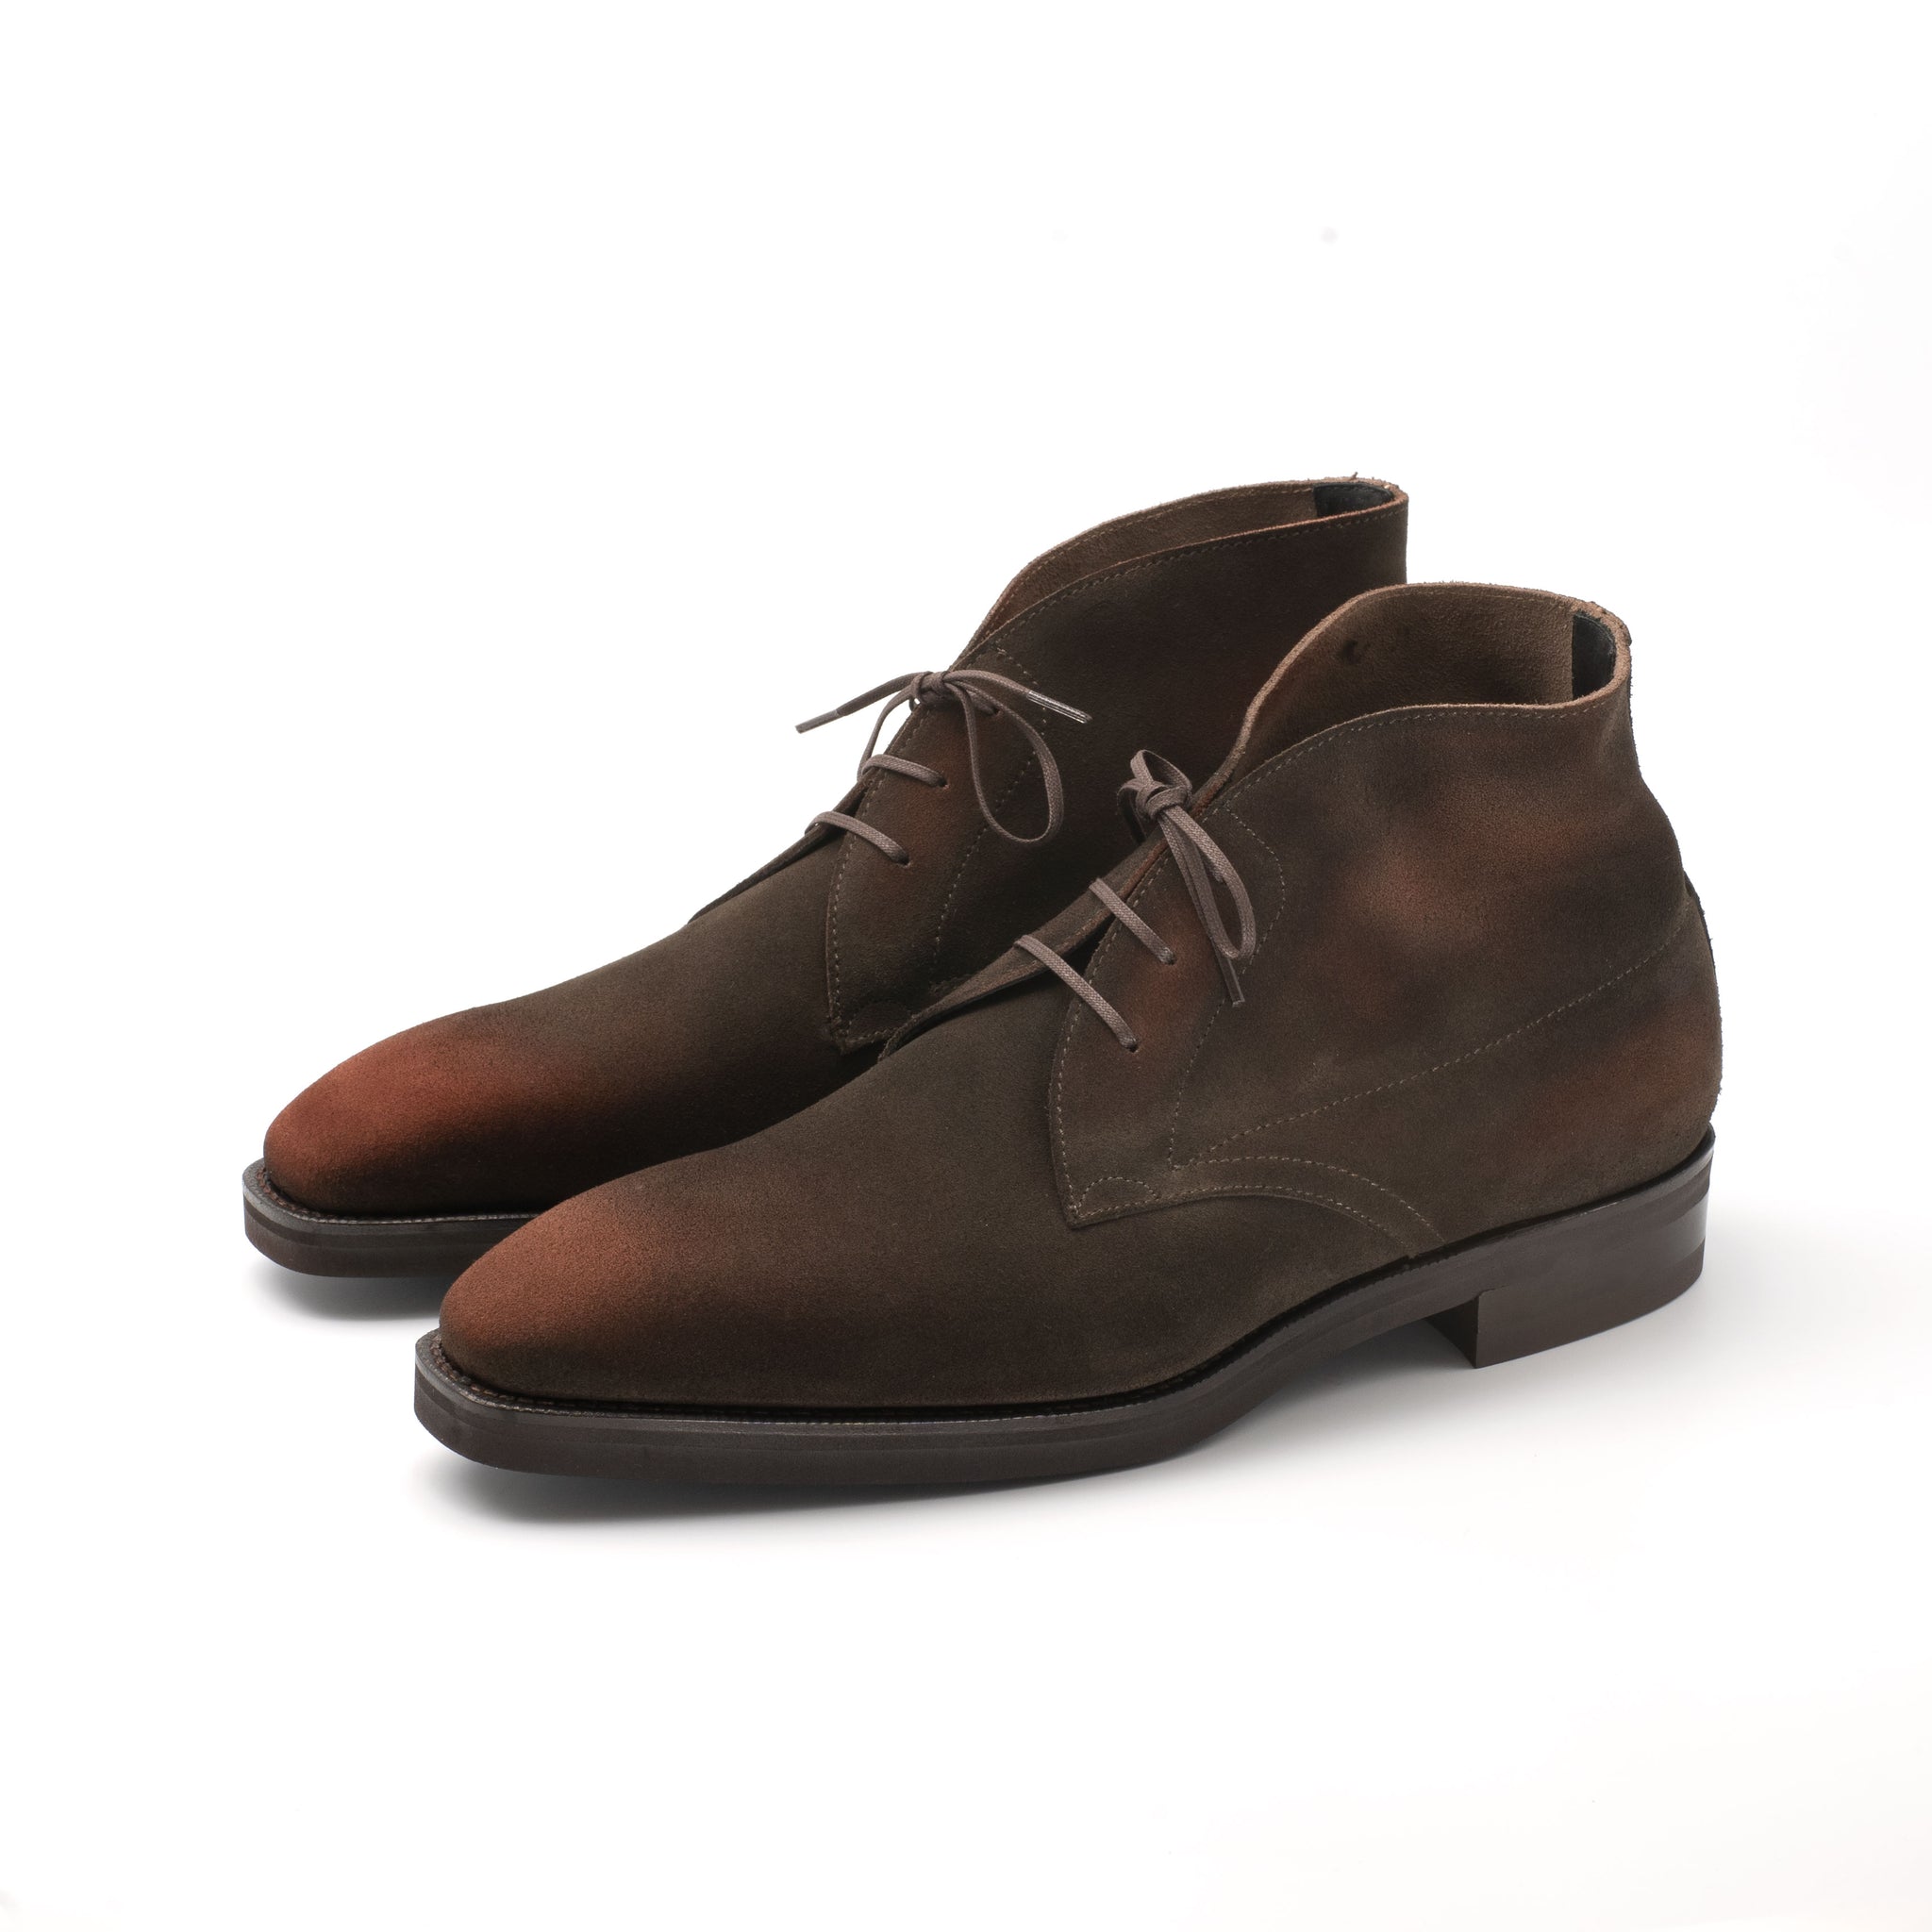 Christopher Chukka Boot | Norman Vilalta Bespoke Shoemakers